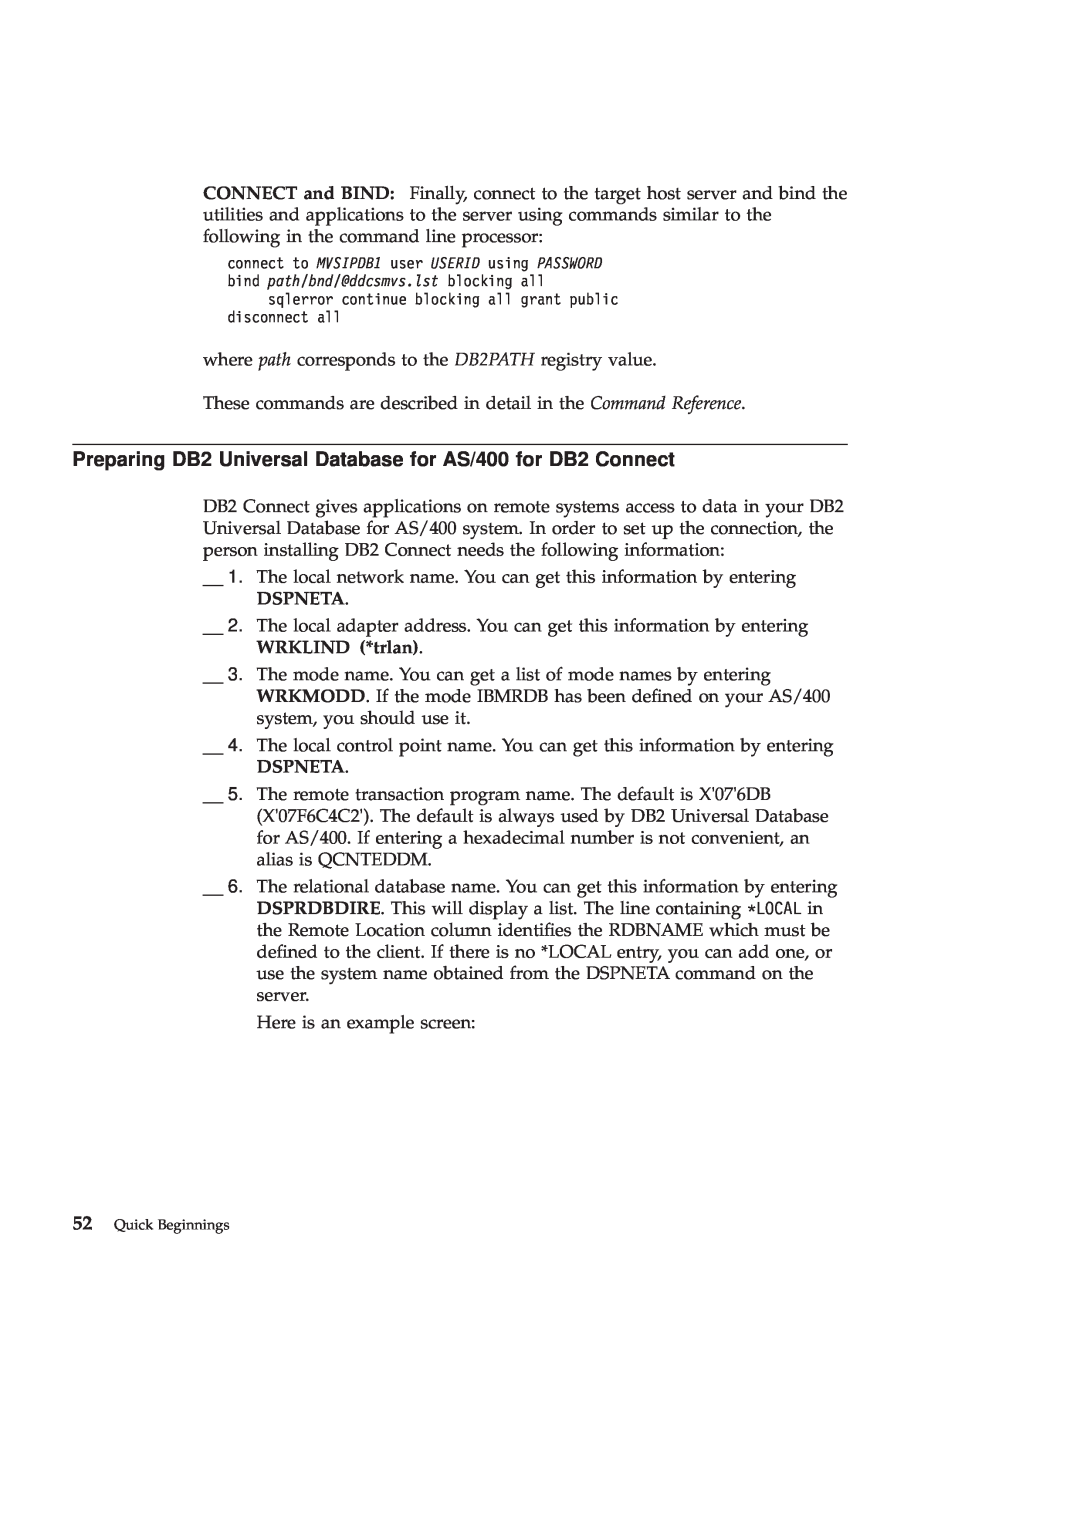 IBM GC09-2830-00 manual Preparing DB2 Universal Database for AS/400 for DB2 Connect, Dspneta 